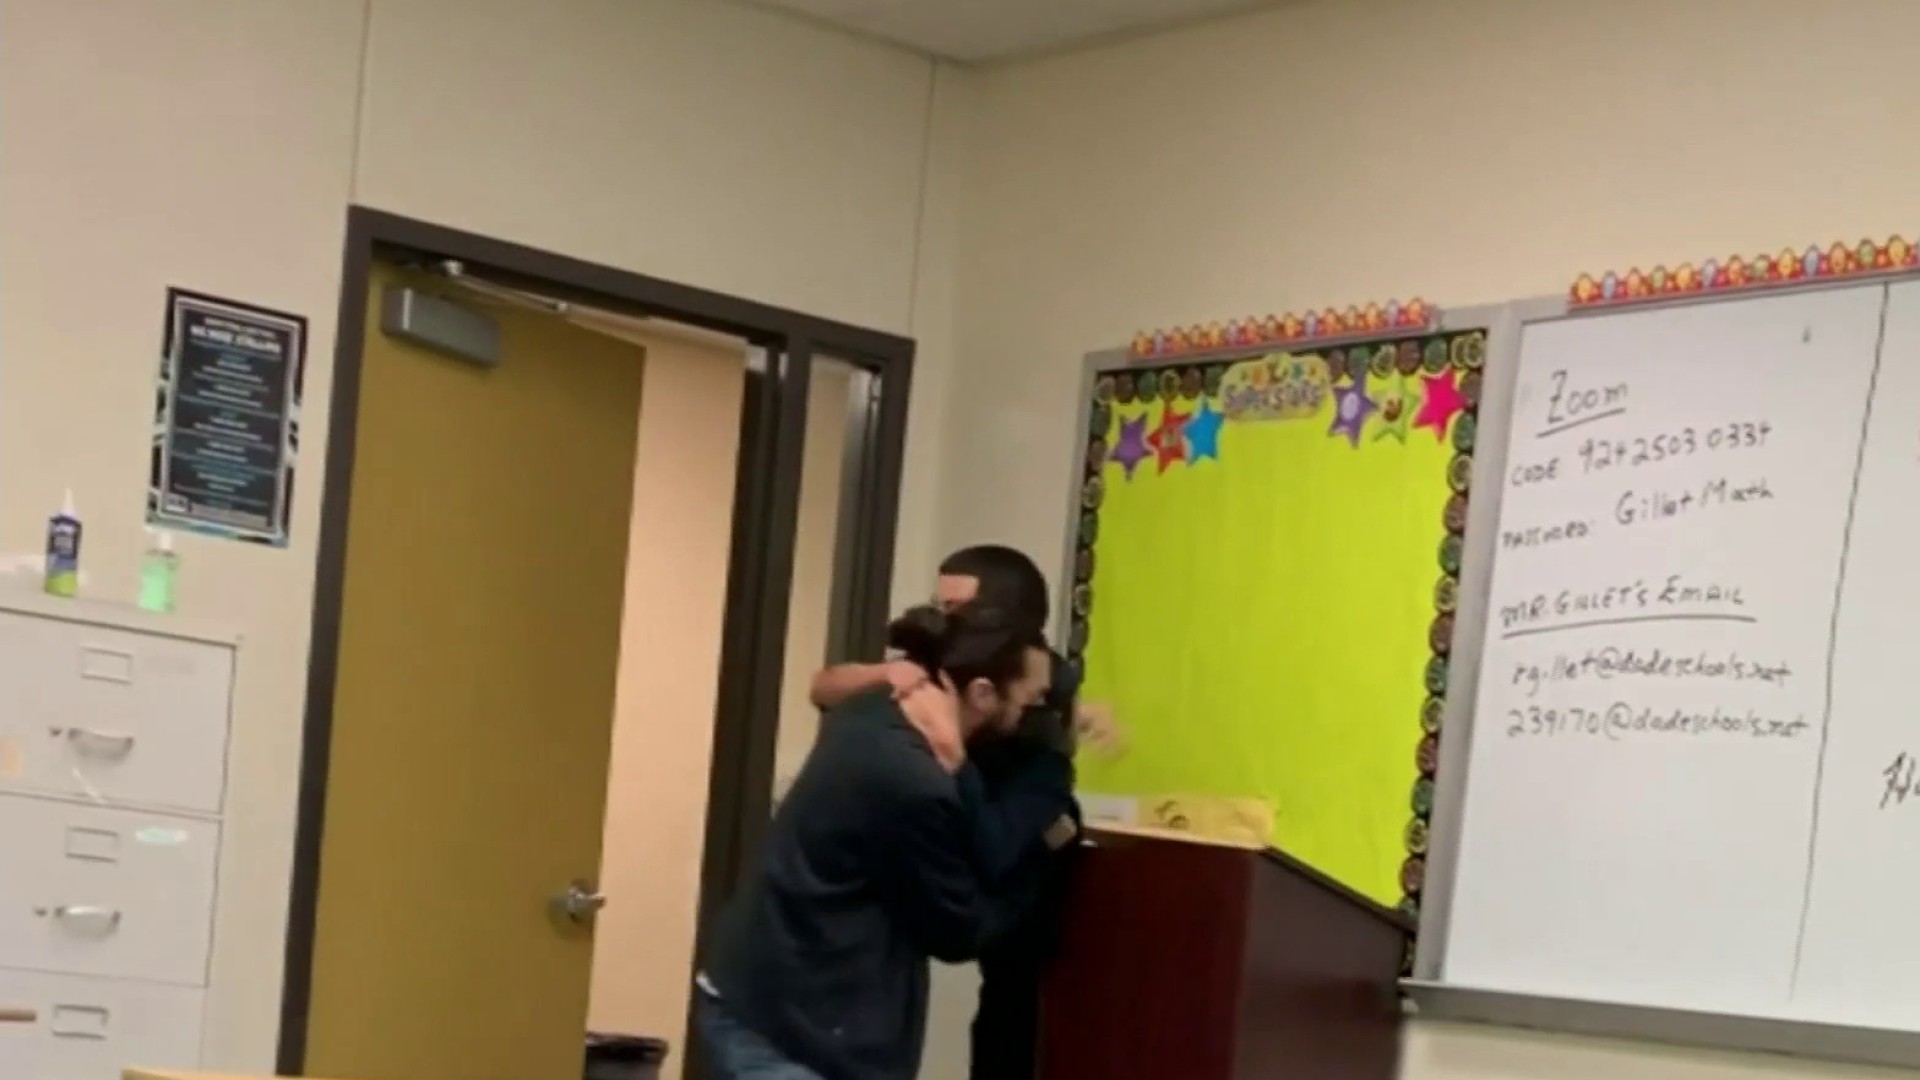 Xxx New School Video - Video shows Florida teacher slamming student in dispute over bathroom break